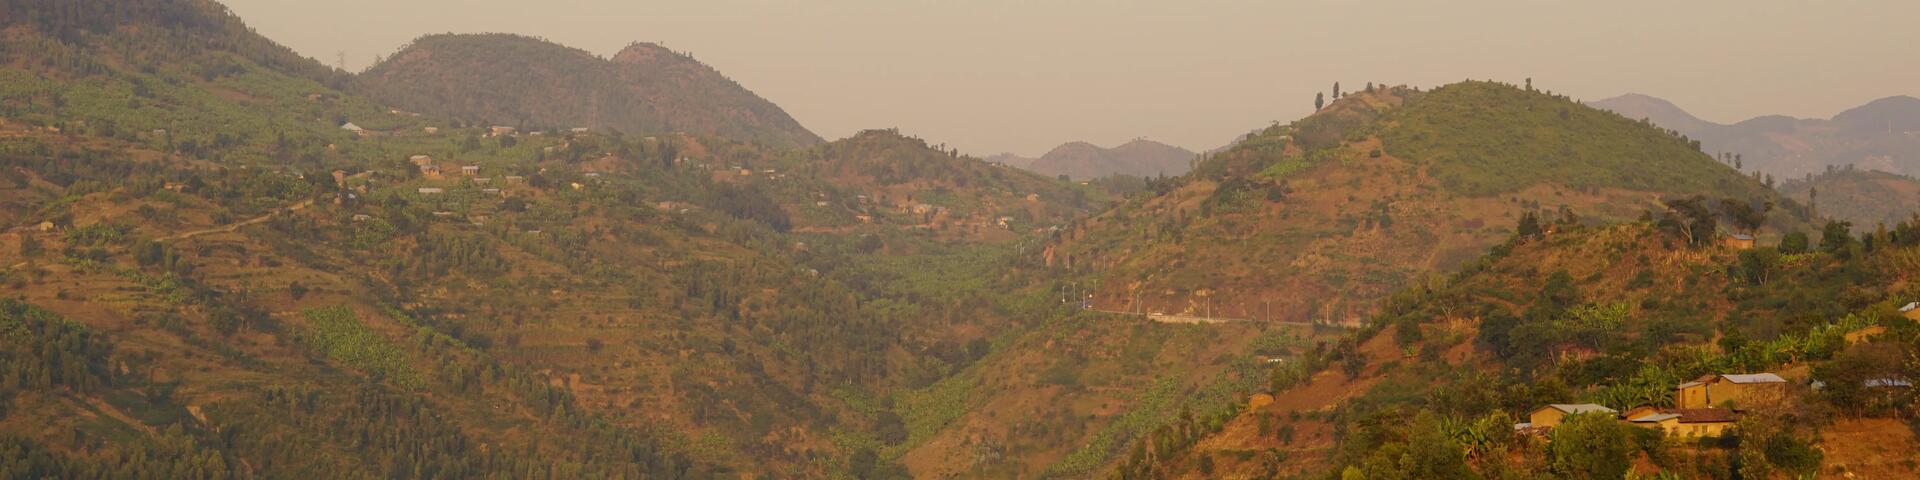 tb-rwanda-collines-coucher-de-soleil